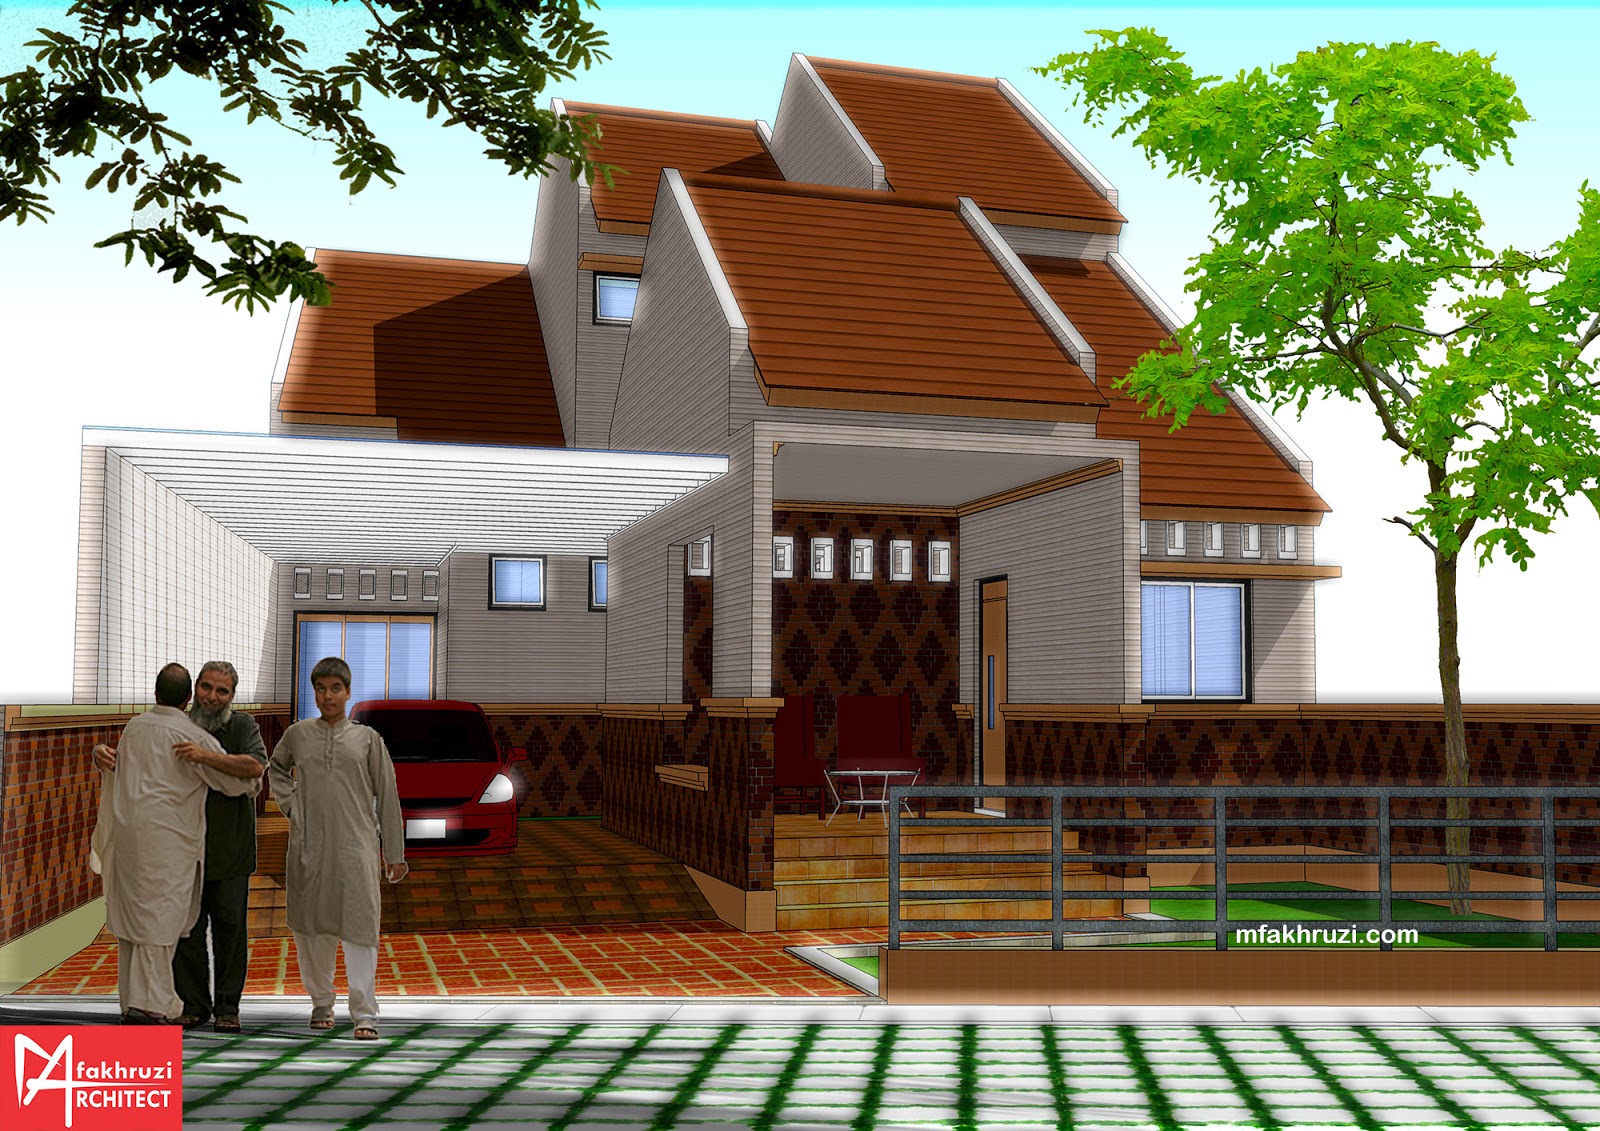 Mfakhruzi Architect Rumah Pinggir Kebun Uk 10x15 M